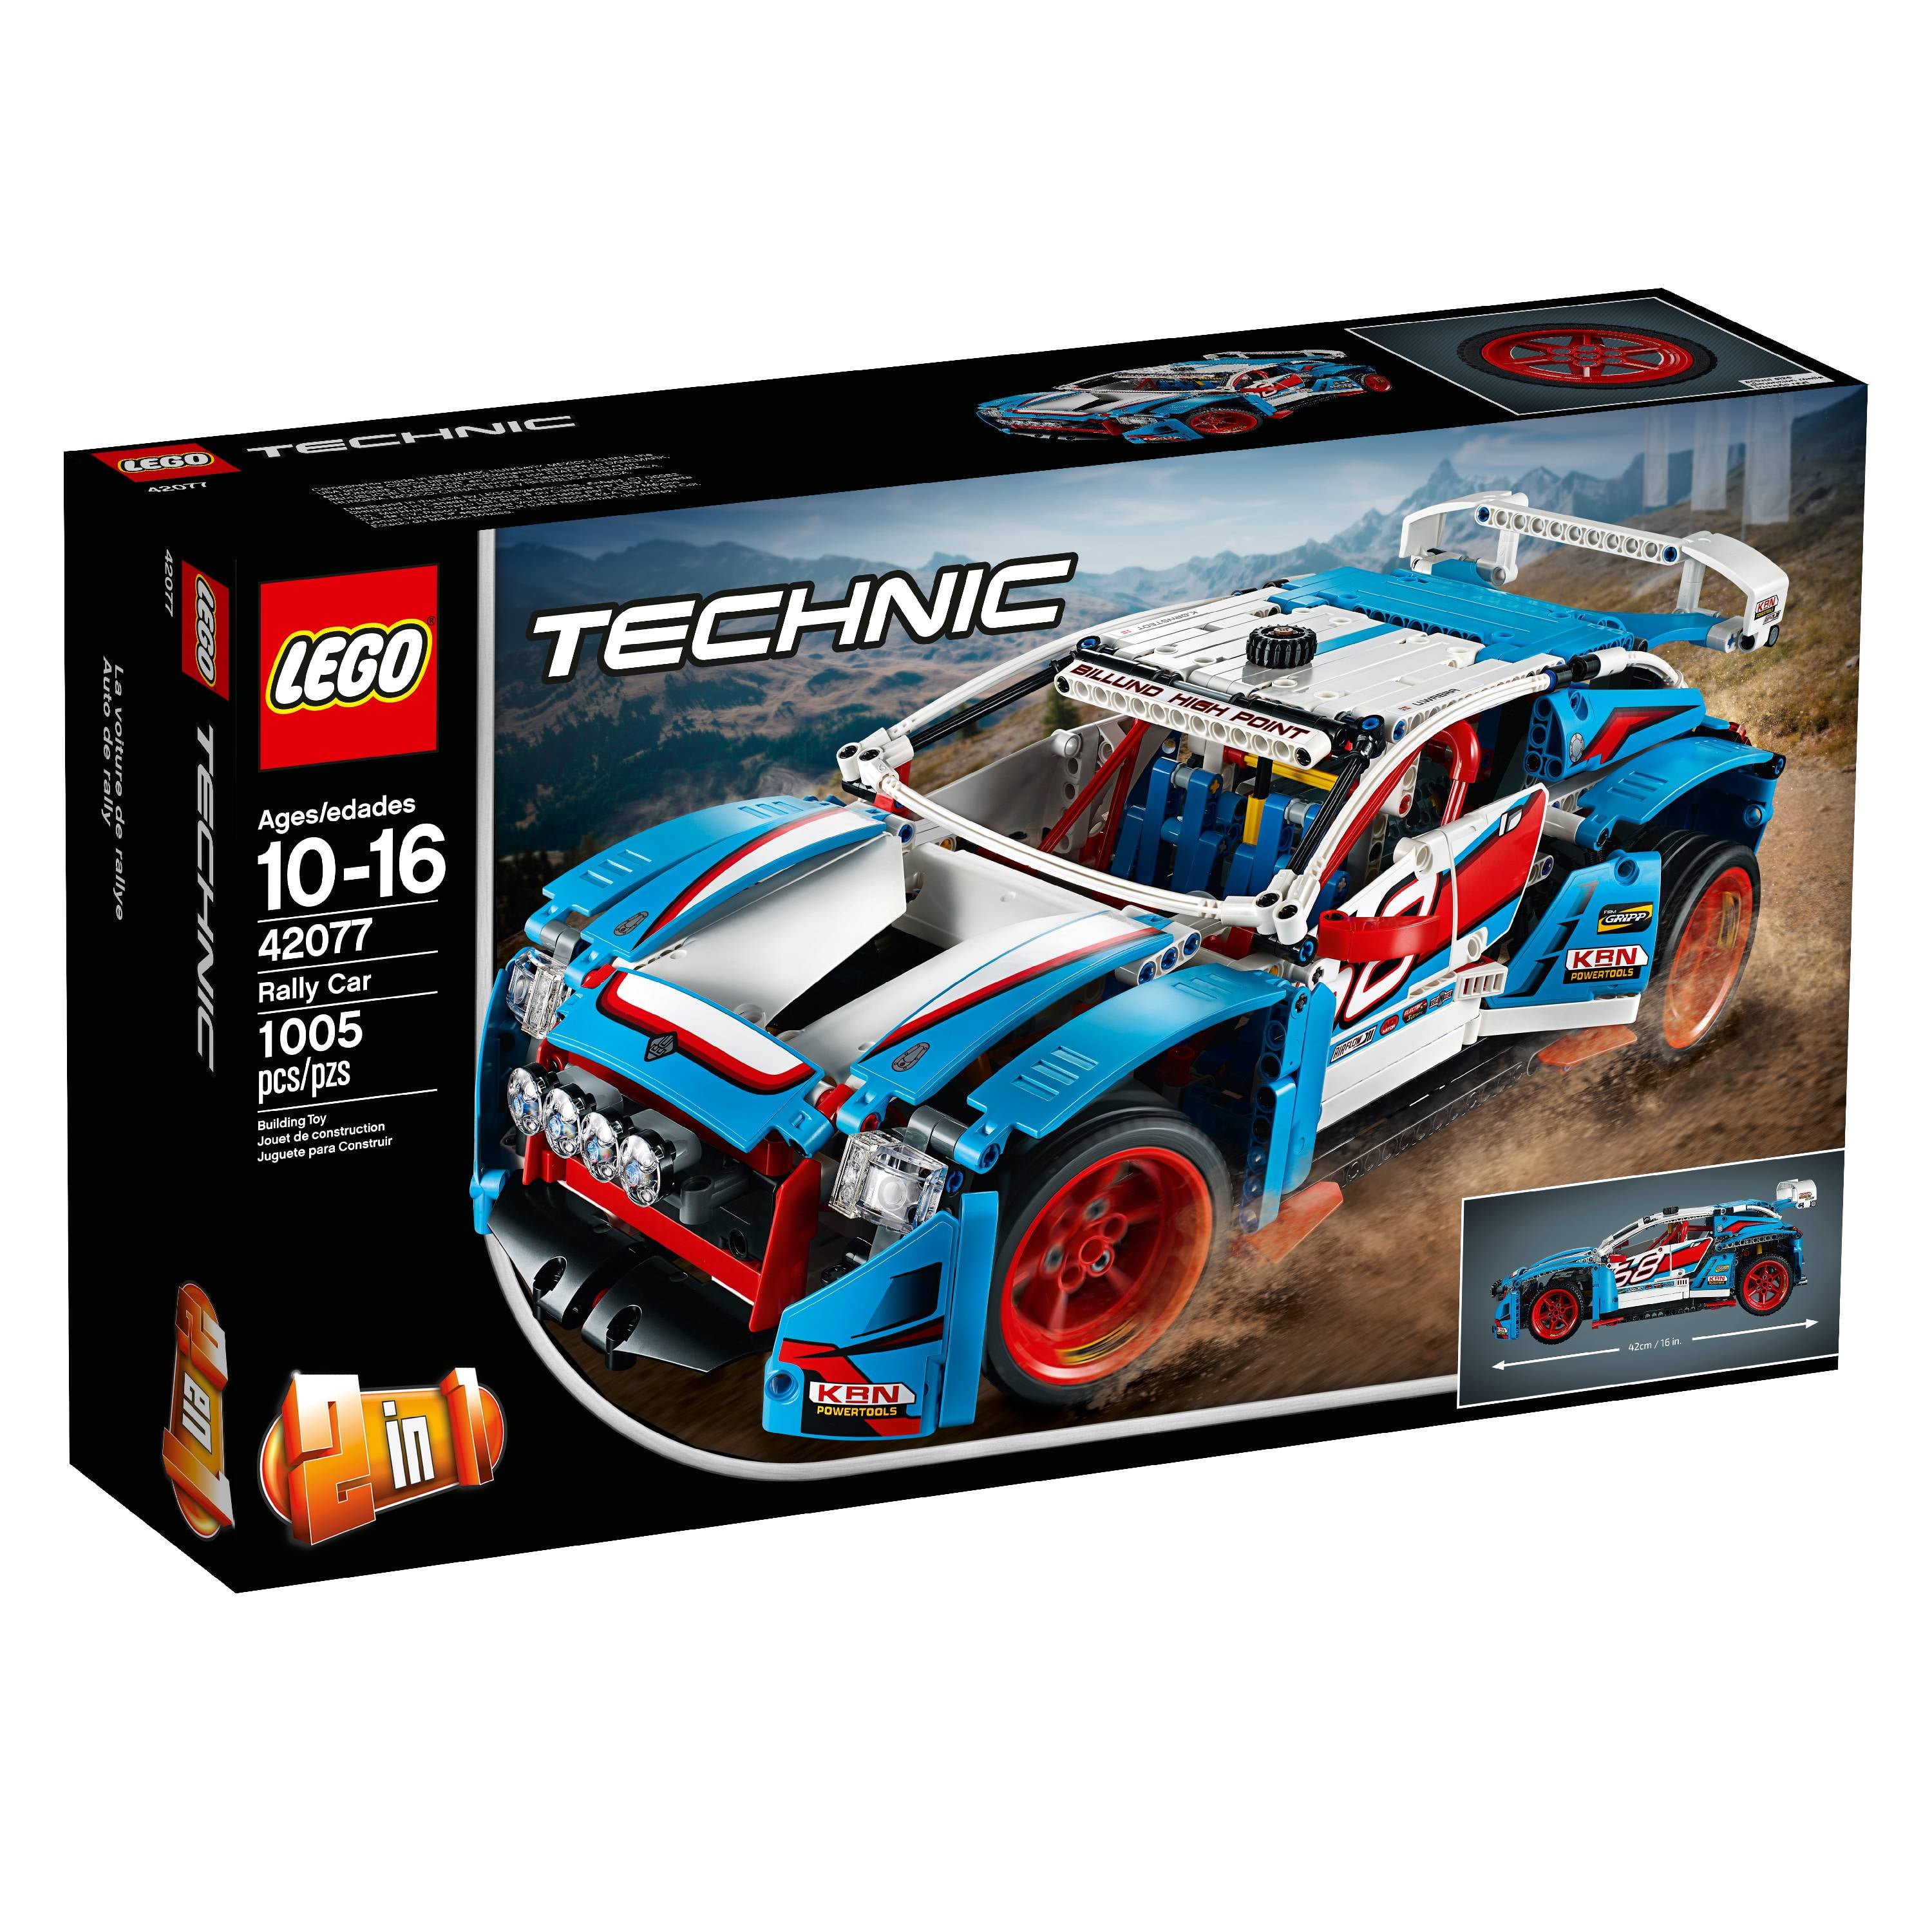 LEGO Technic 42077 Building Set (1,005 Pieces) - Walmart.com